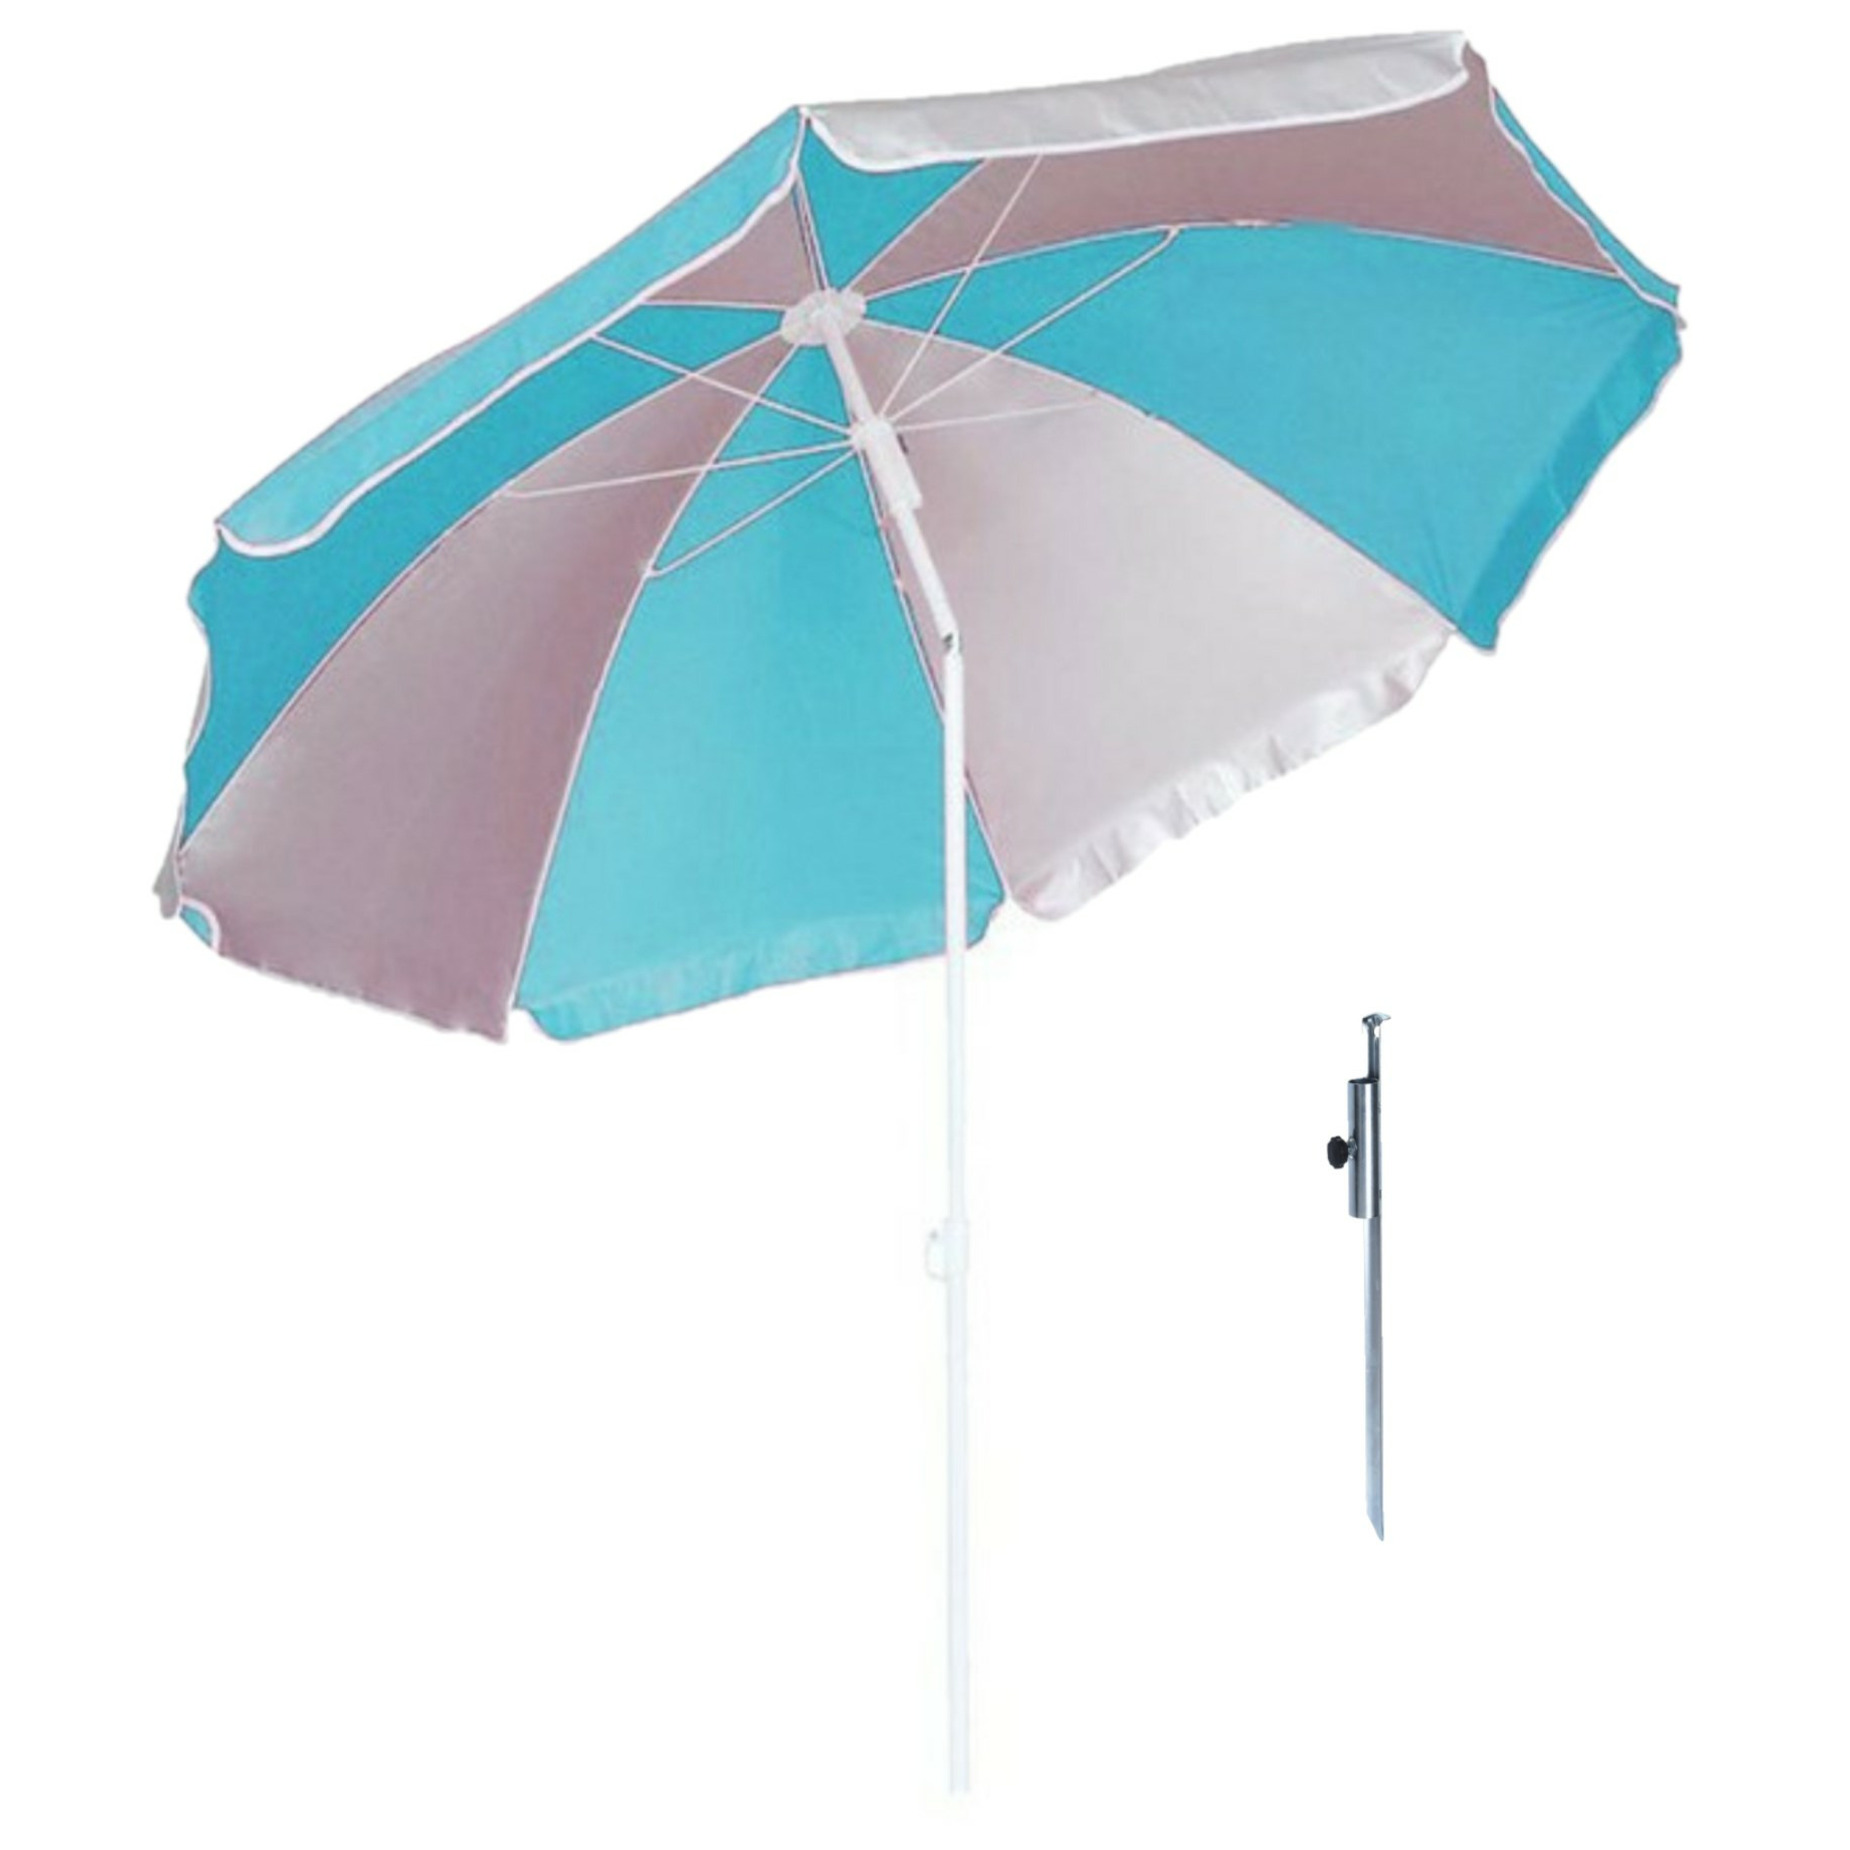 Merkloos Parasol - blauw/wit - D120 cm - incl. draagtas - parasolharing - 49 cm -